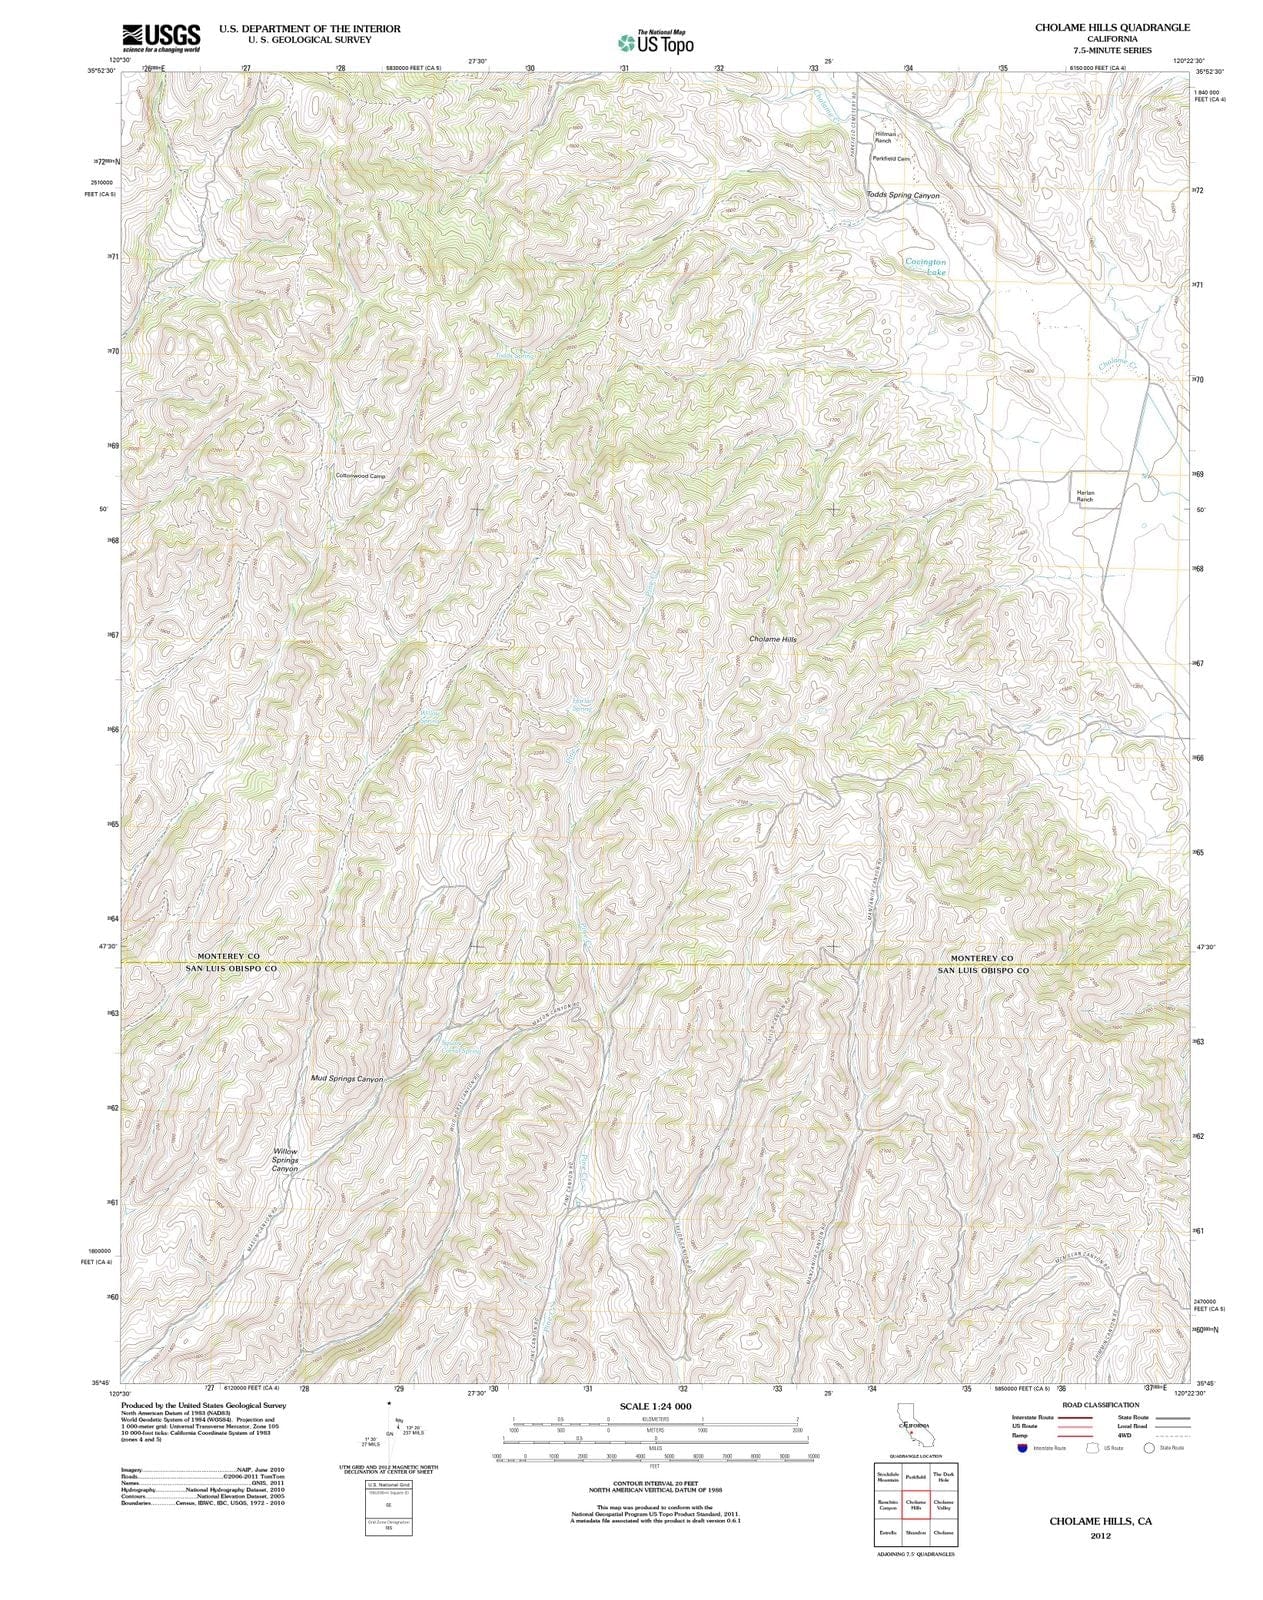 2012 Cholame Hills, CA - California - USGS Topographic Map